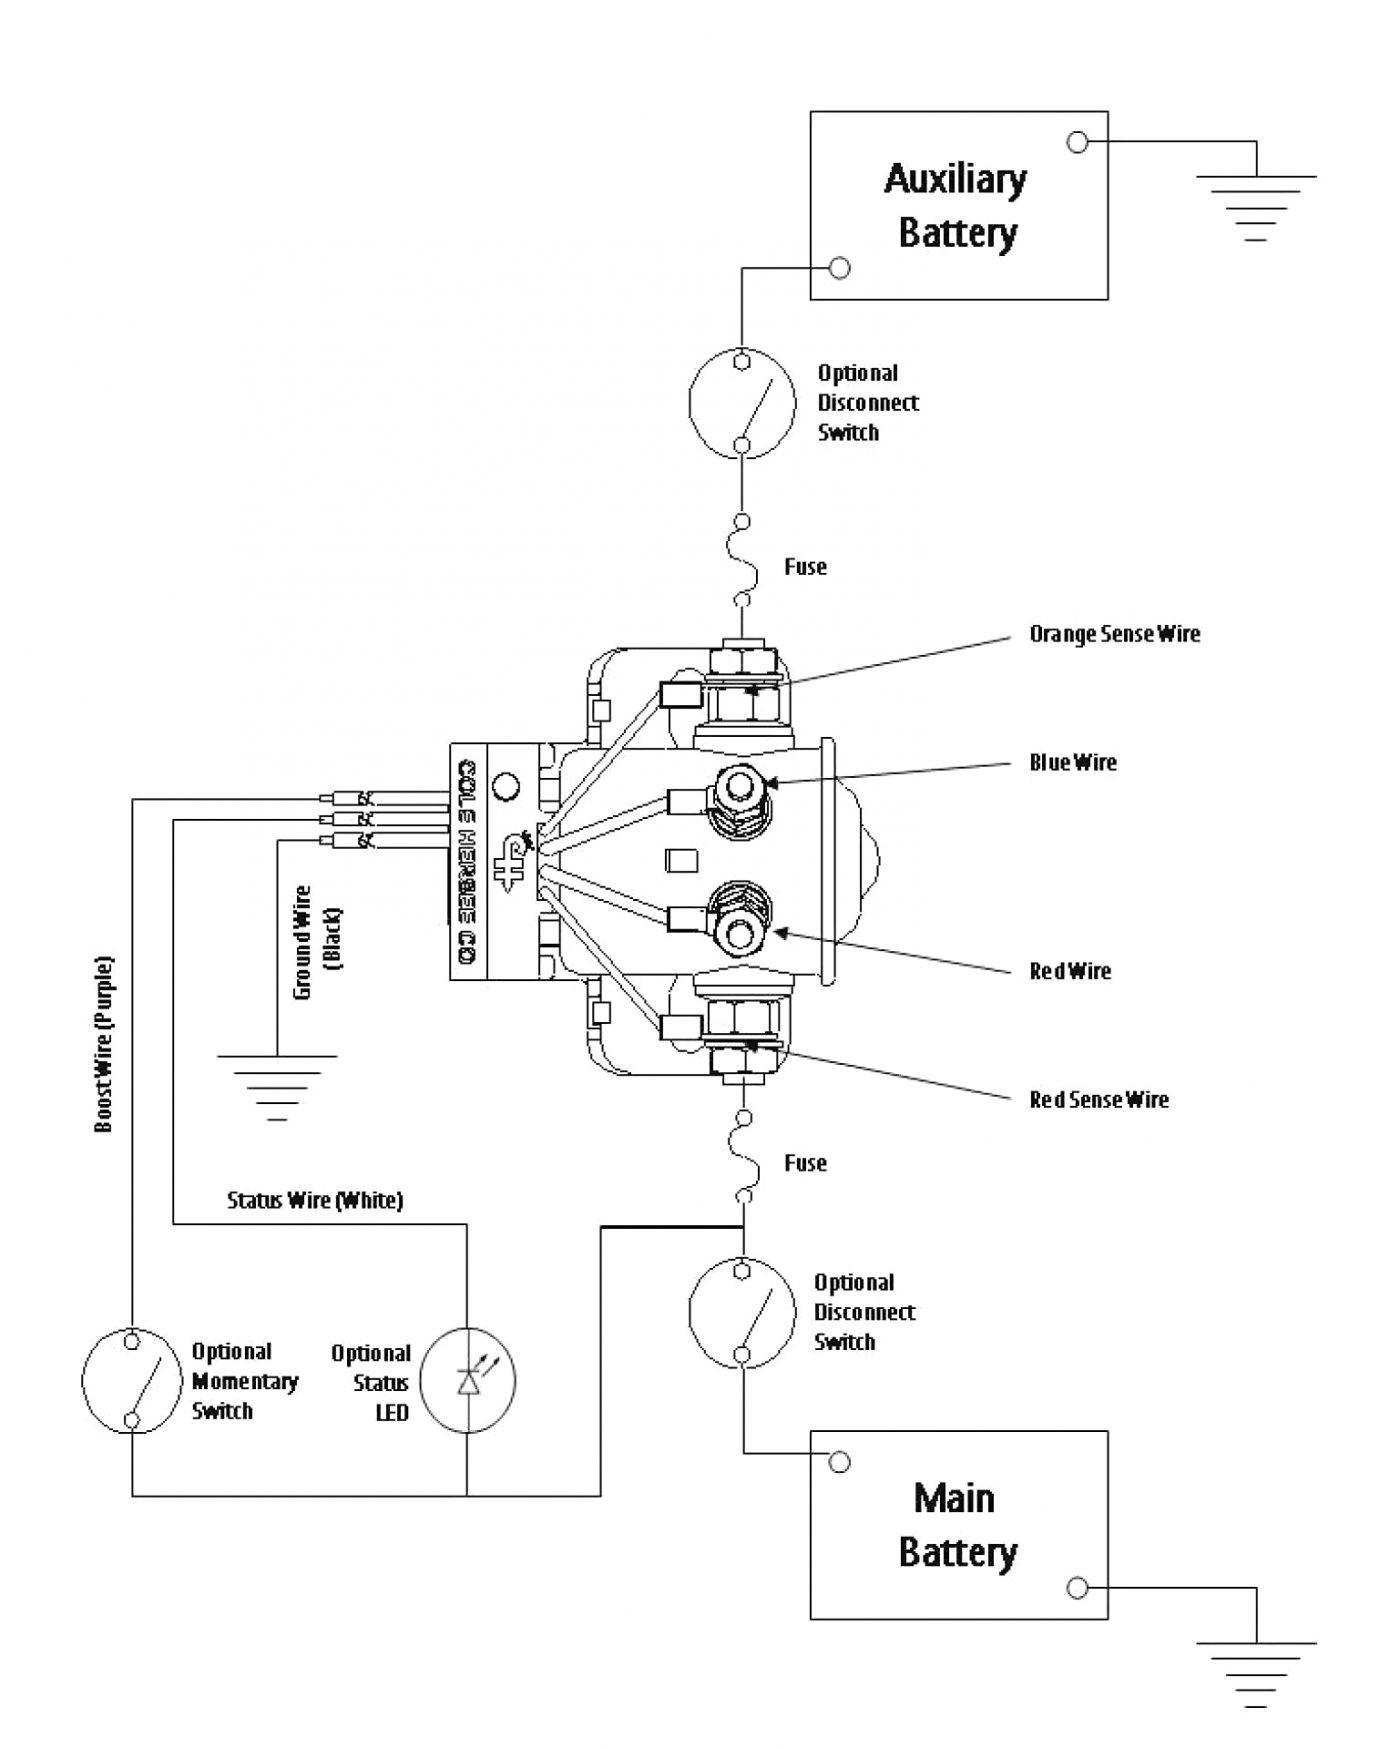 1990 Club Car Battery Wiring Diagram 36 Volt 2018 Wiring Diagram 7 Pin Round Trailer Plug Wiring Diagram Anderson Plug Wiring Diagram